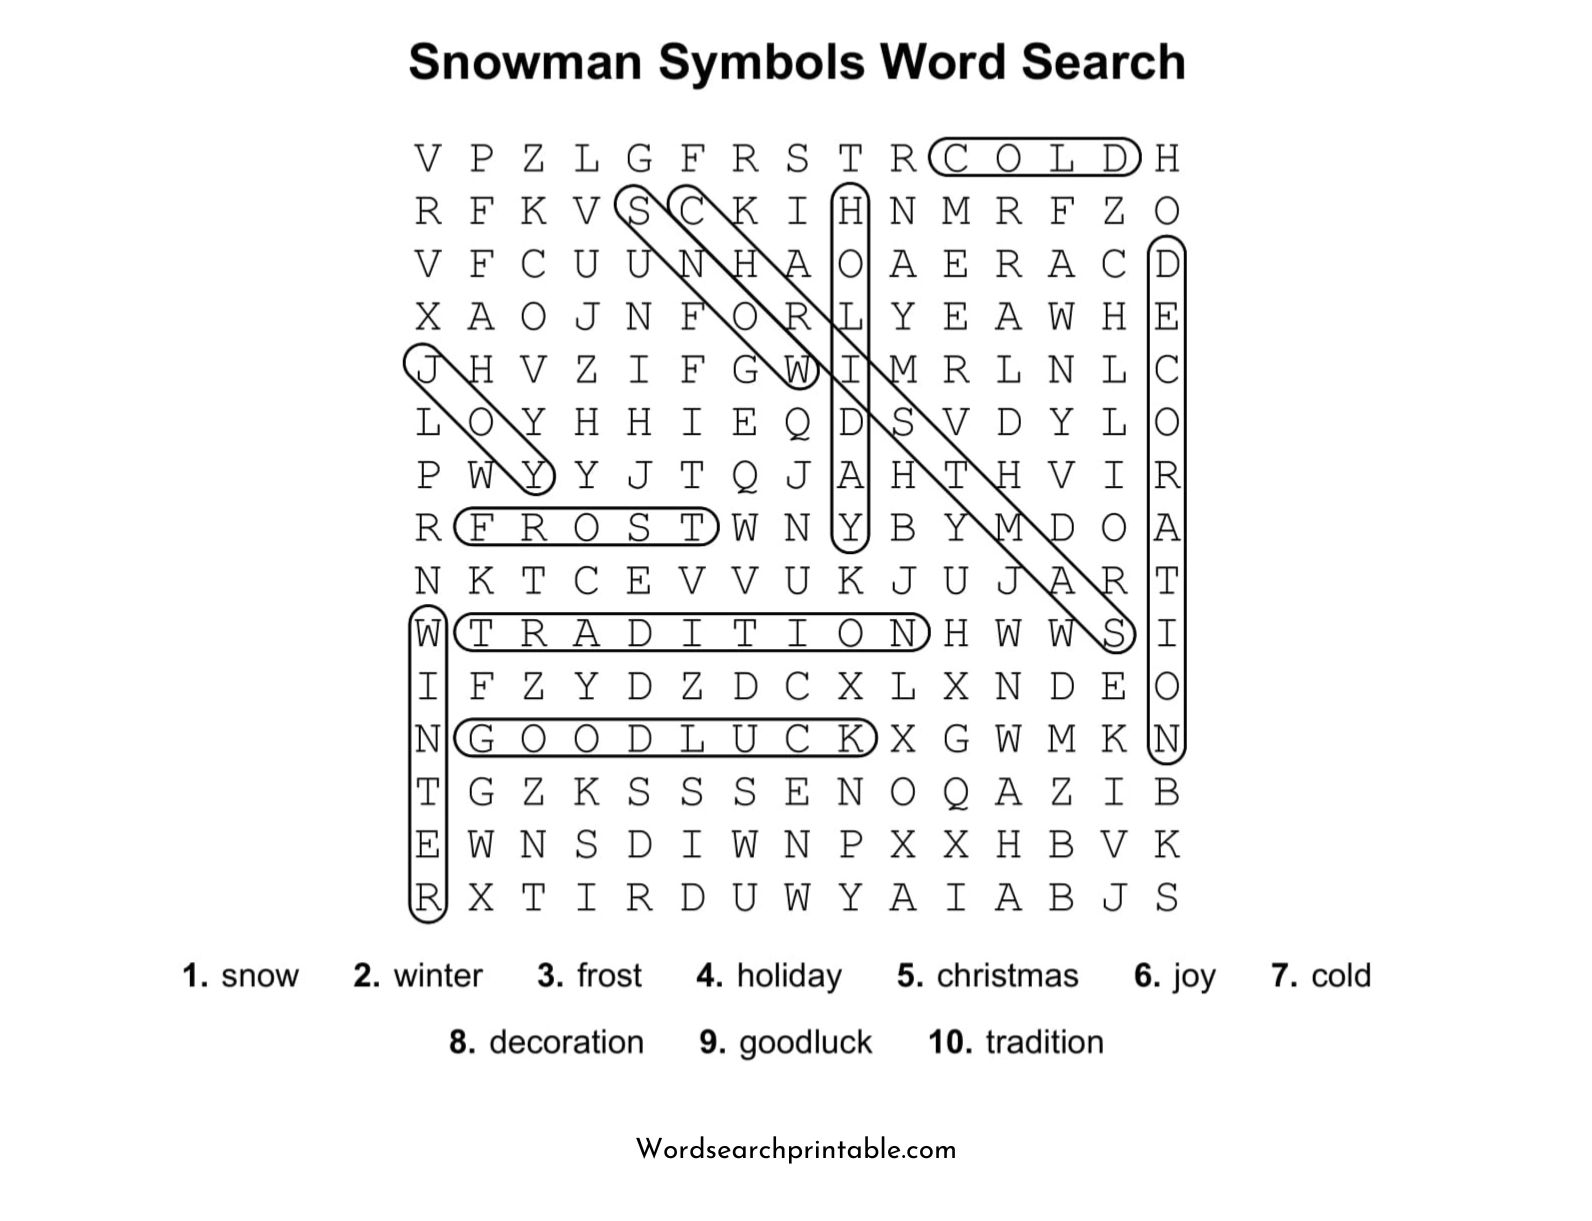 snowman-symbols-word-search-puzzle-solution